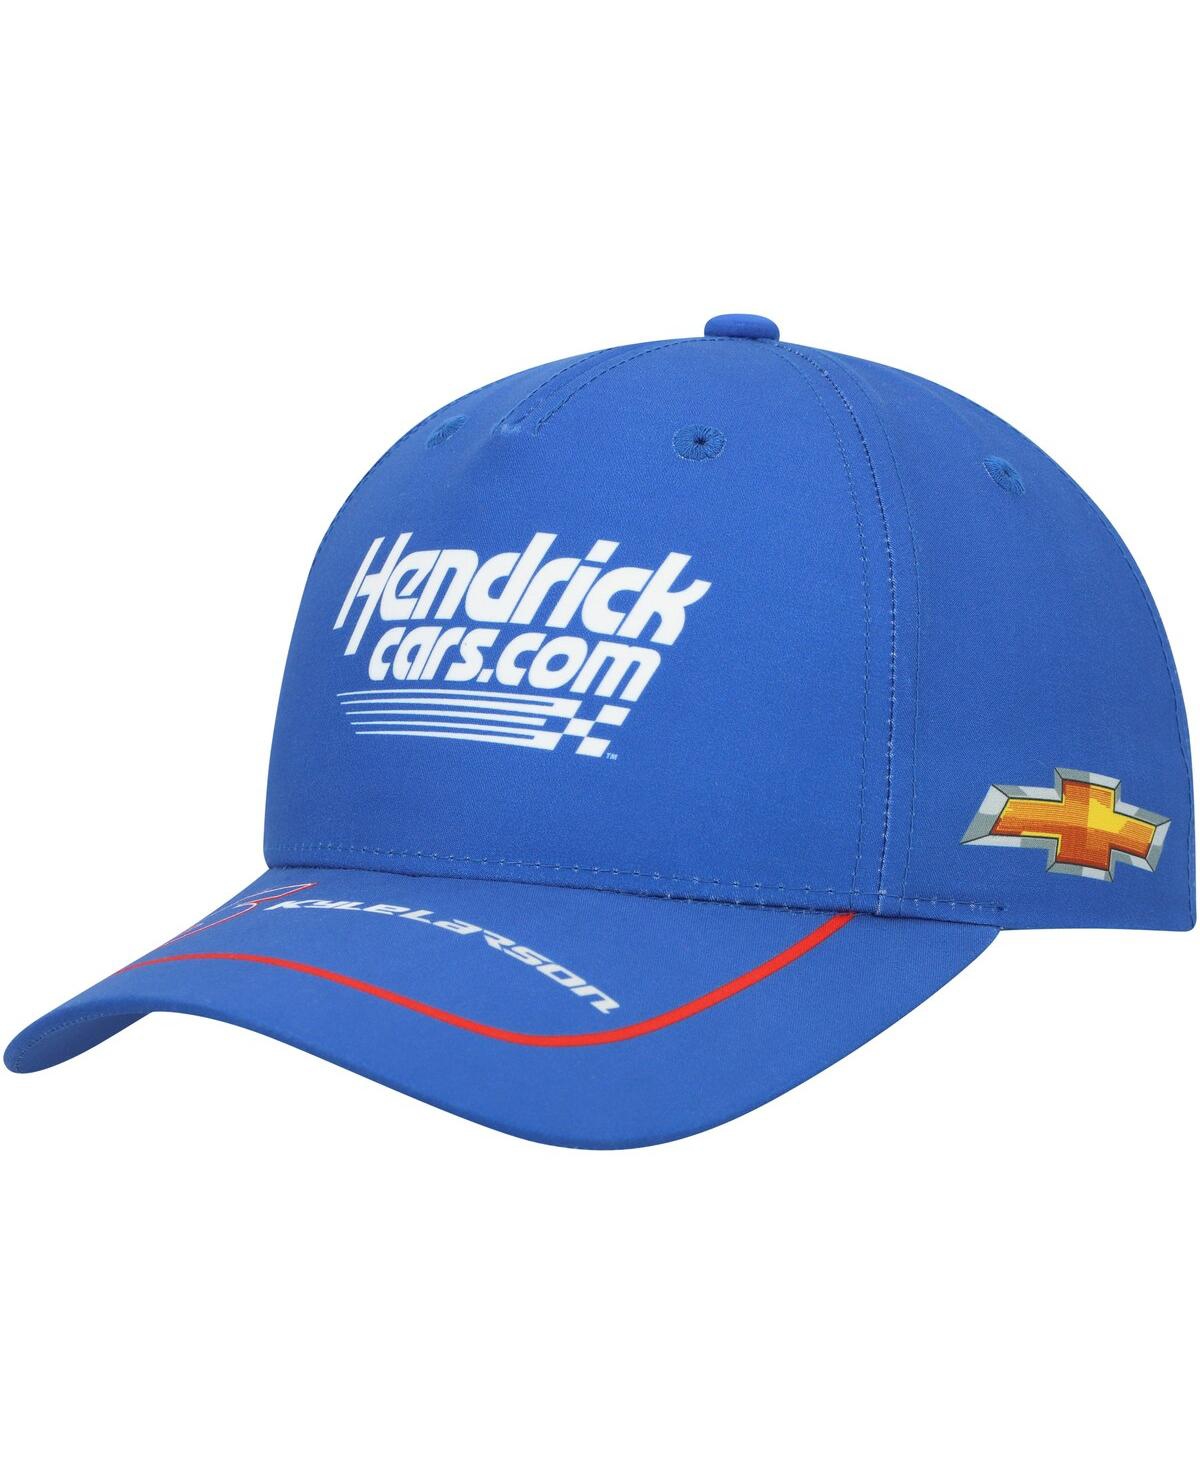 Men's Hendrick Motorsports Team Collection Royal Kyle Larson Sponsor Uniform Adjustable Hat - Royal